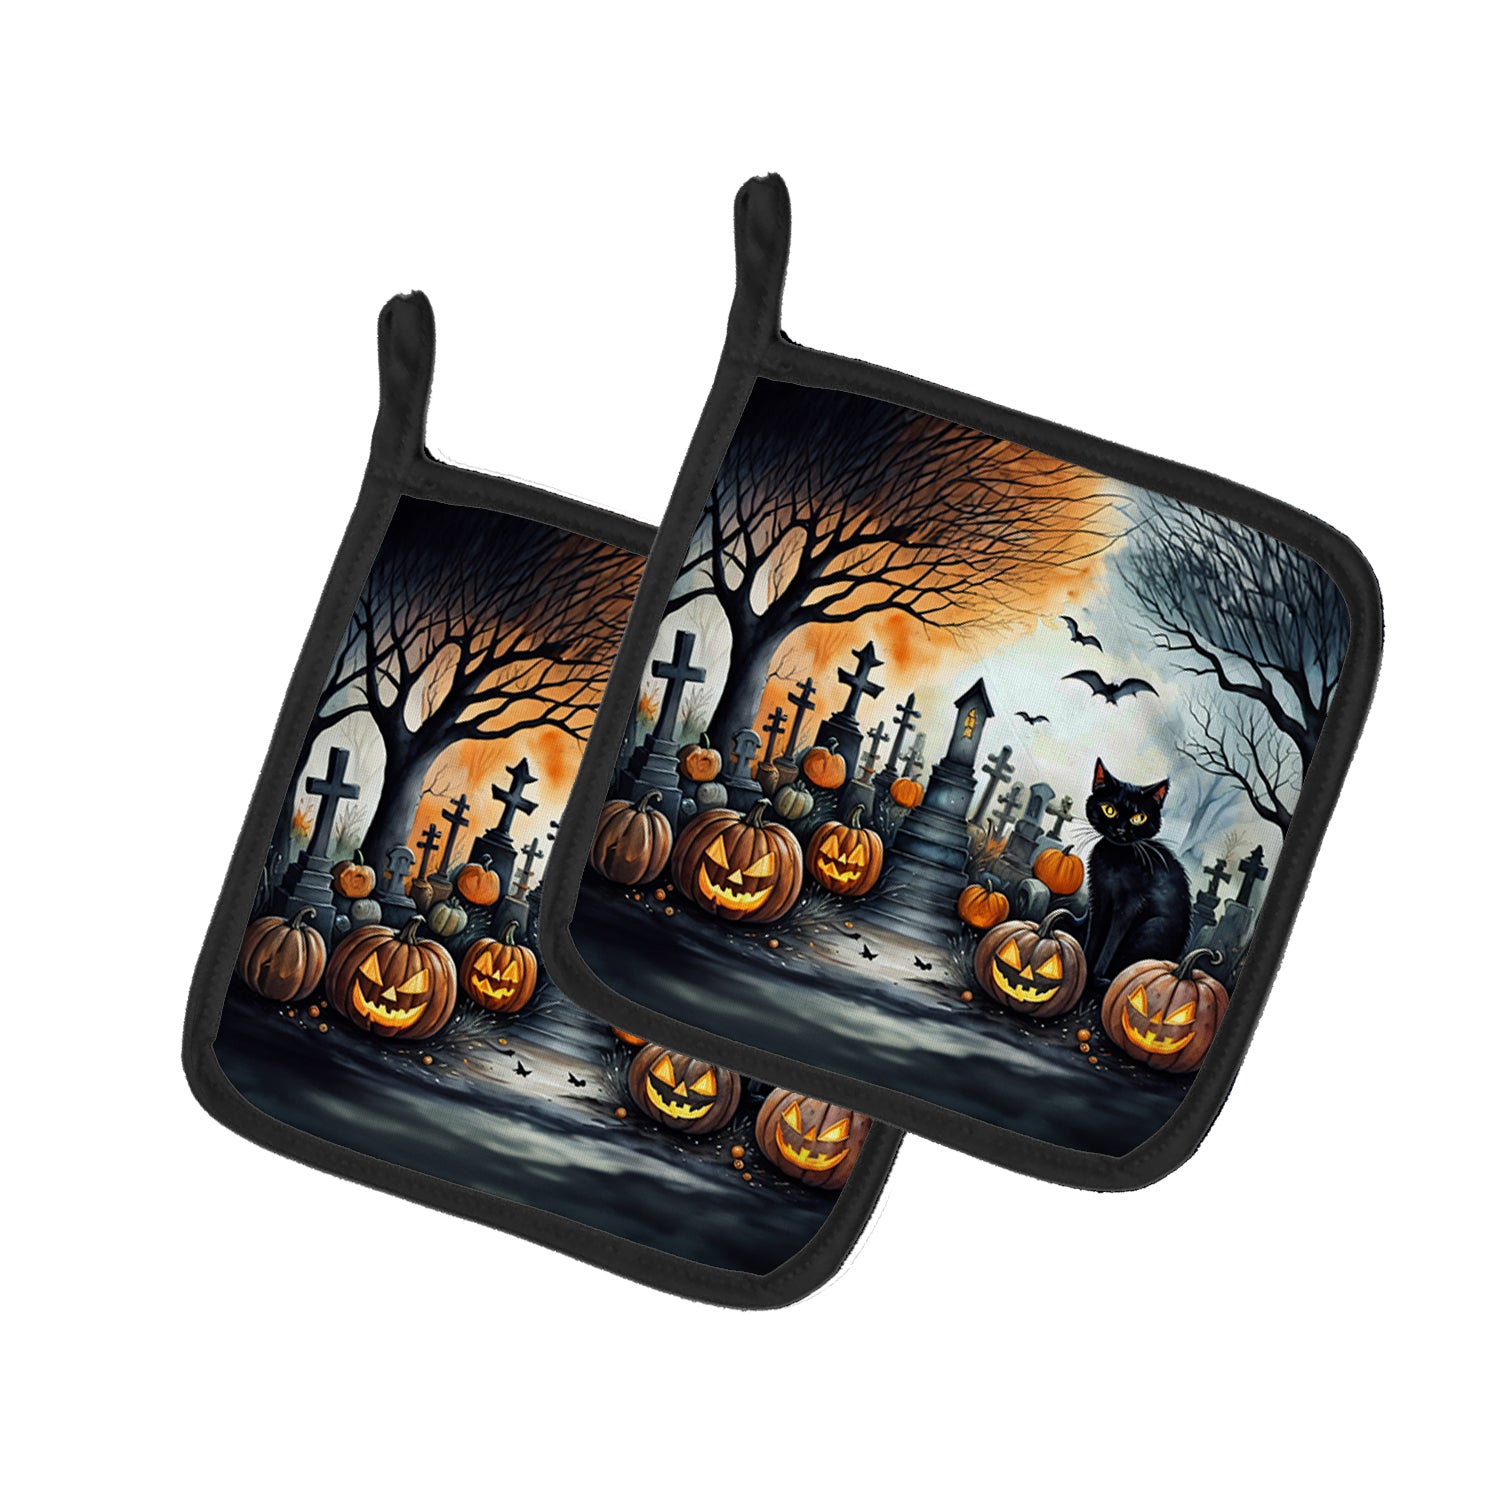 Buy this Black Cat Spooky Halloween Pair of Pot Holders